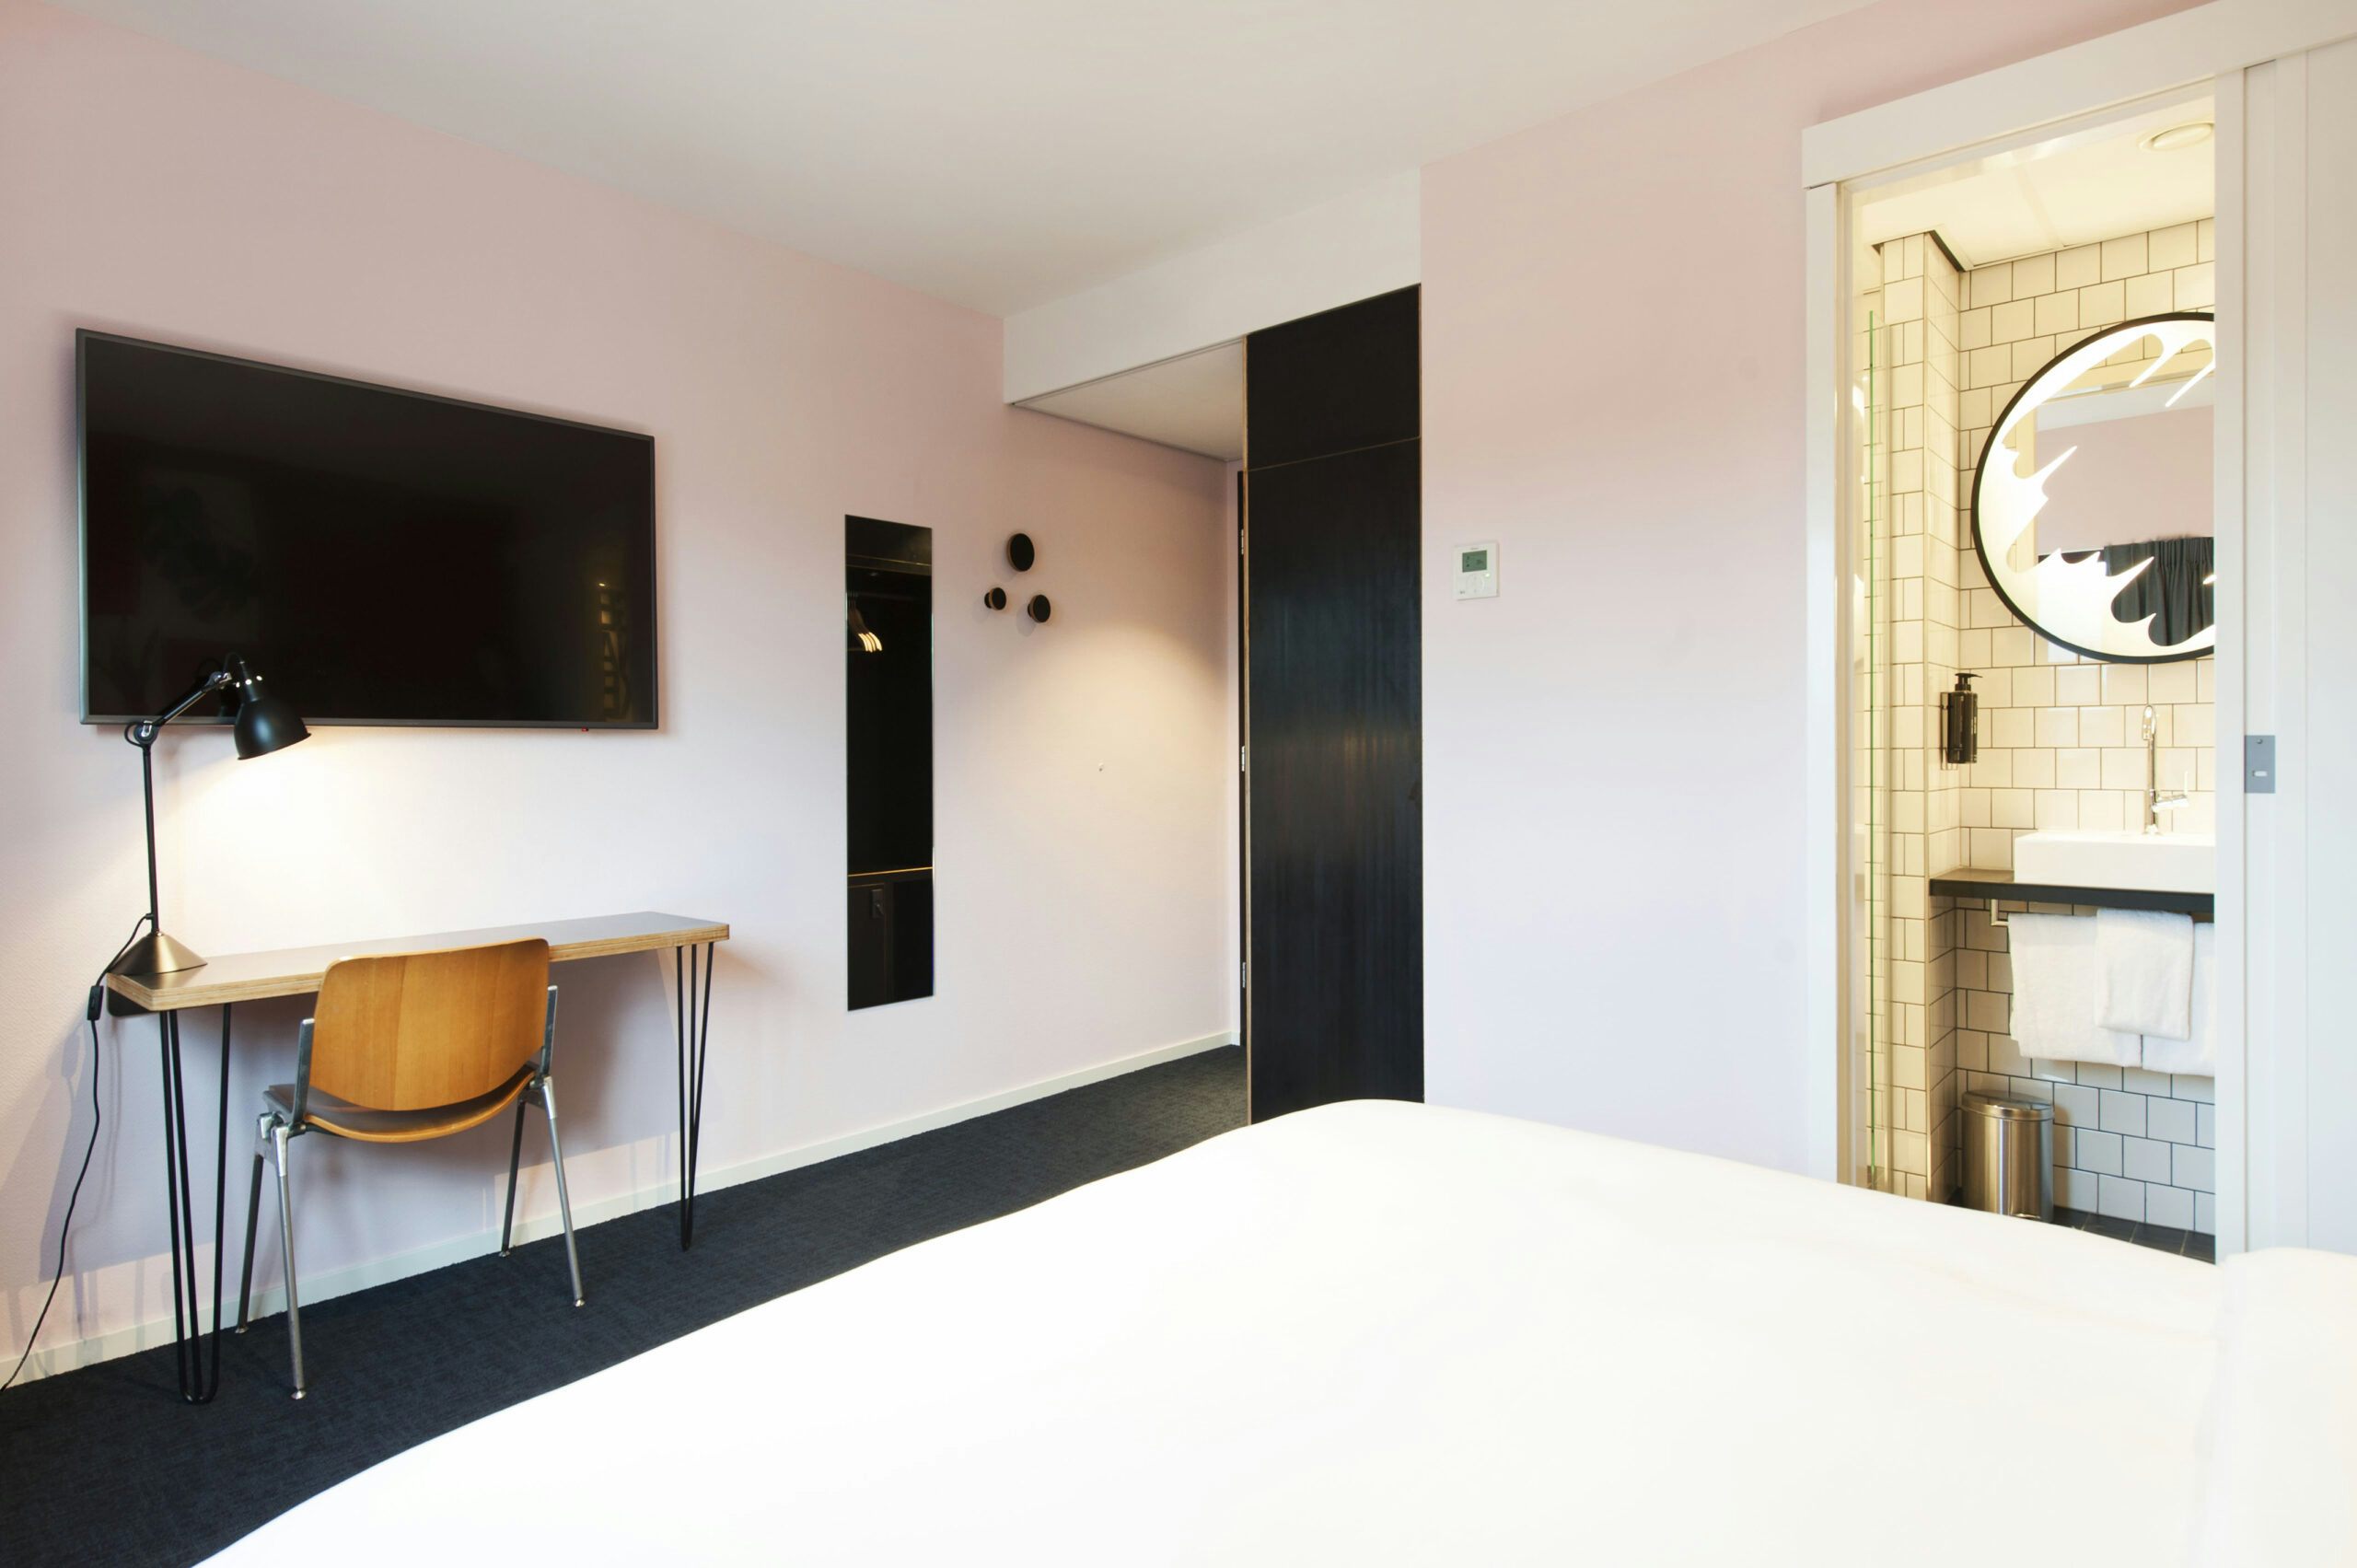 consccious hotel - big double room